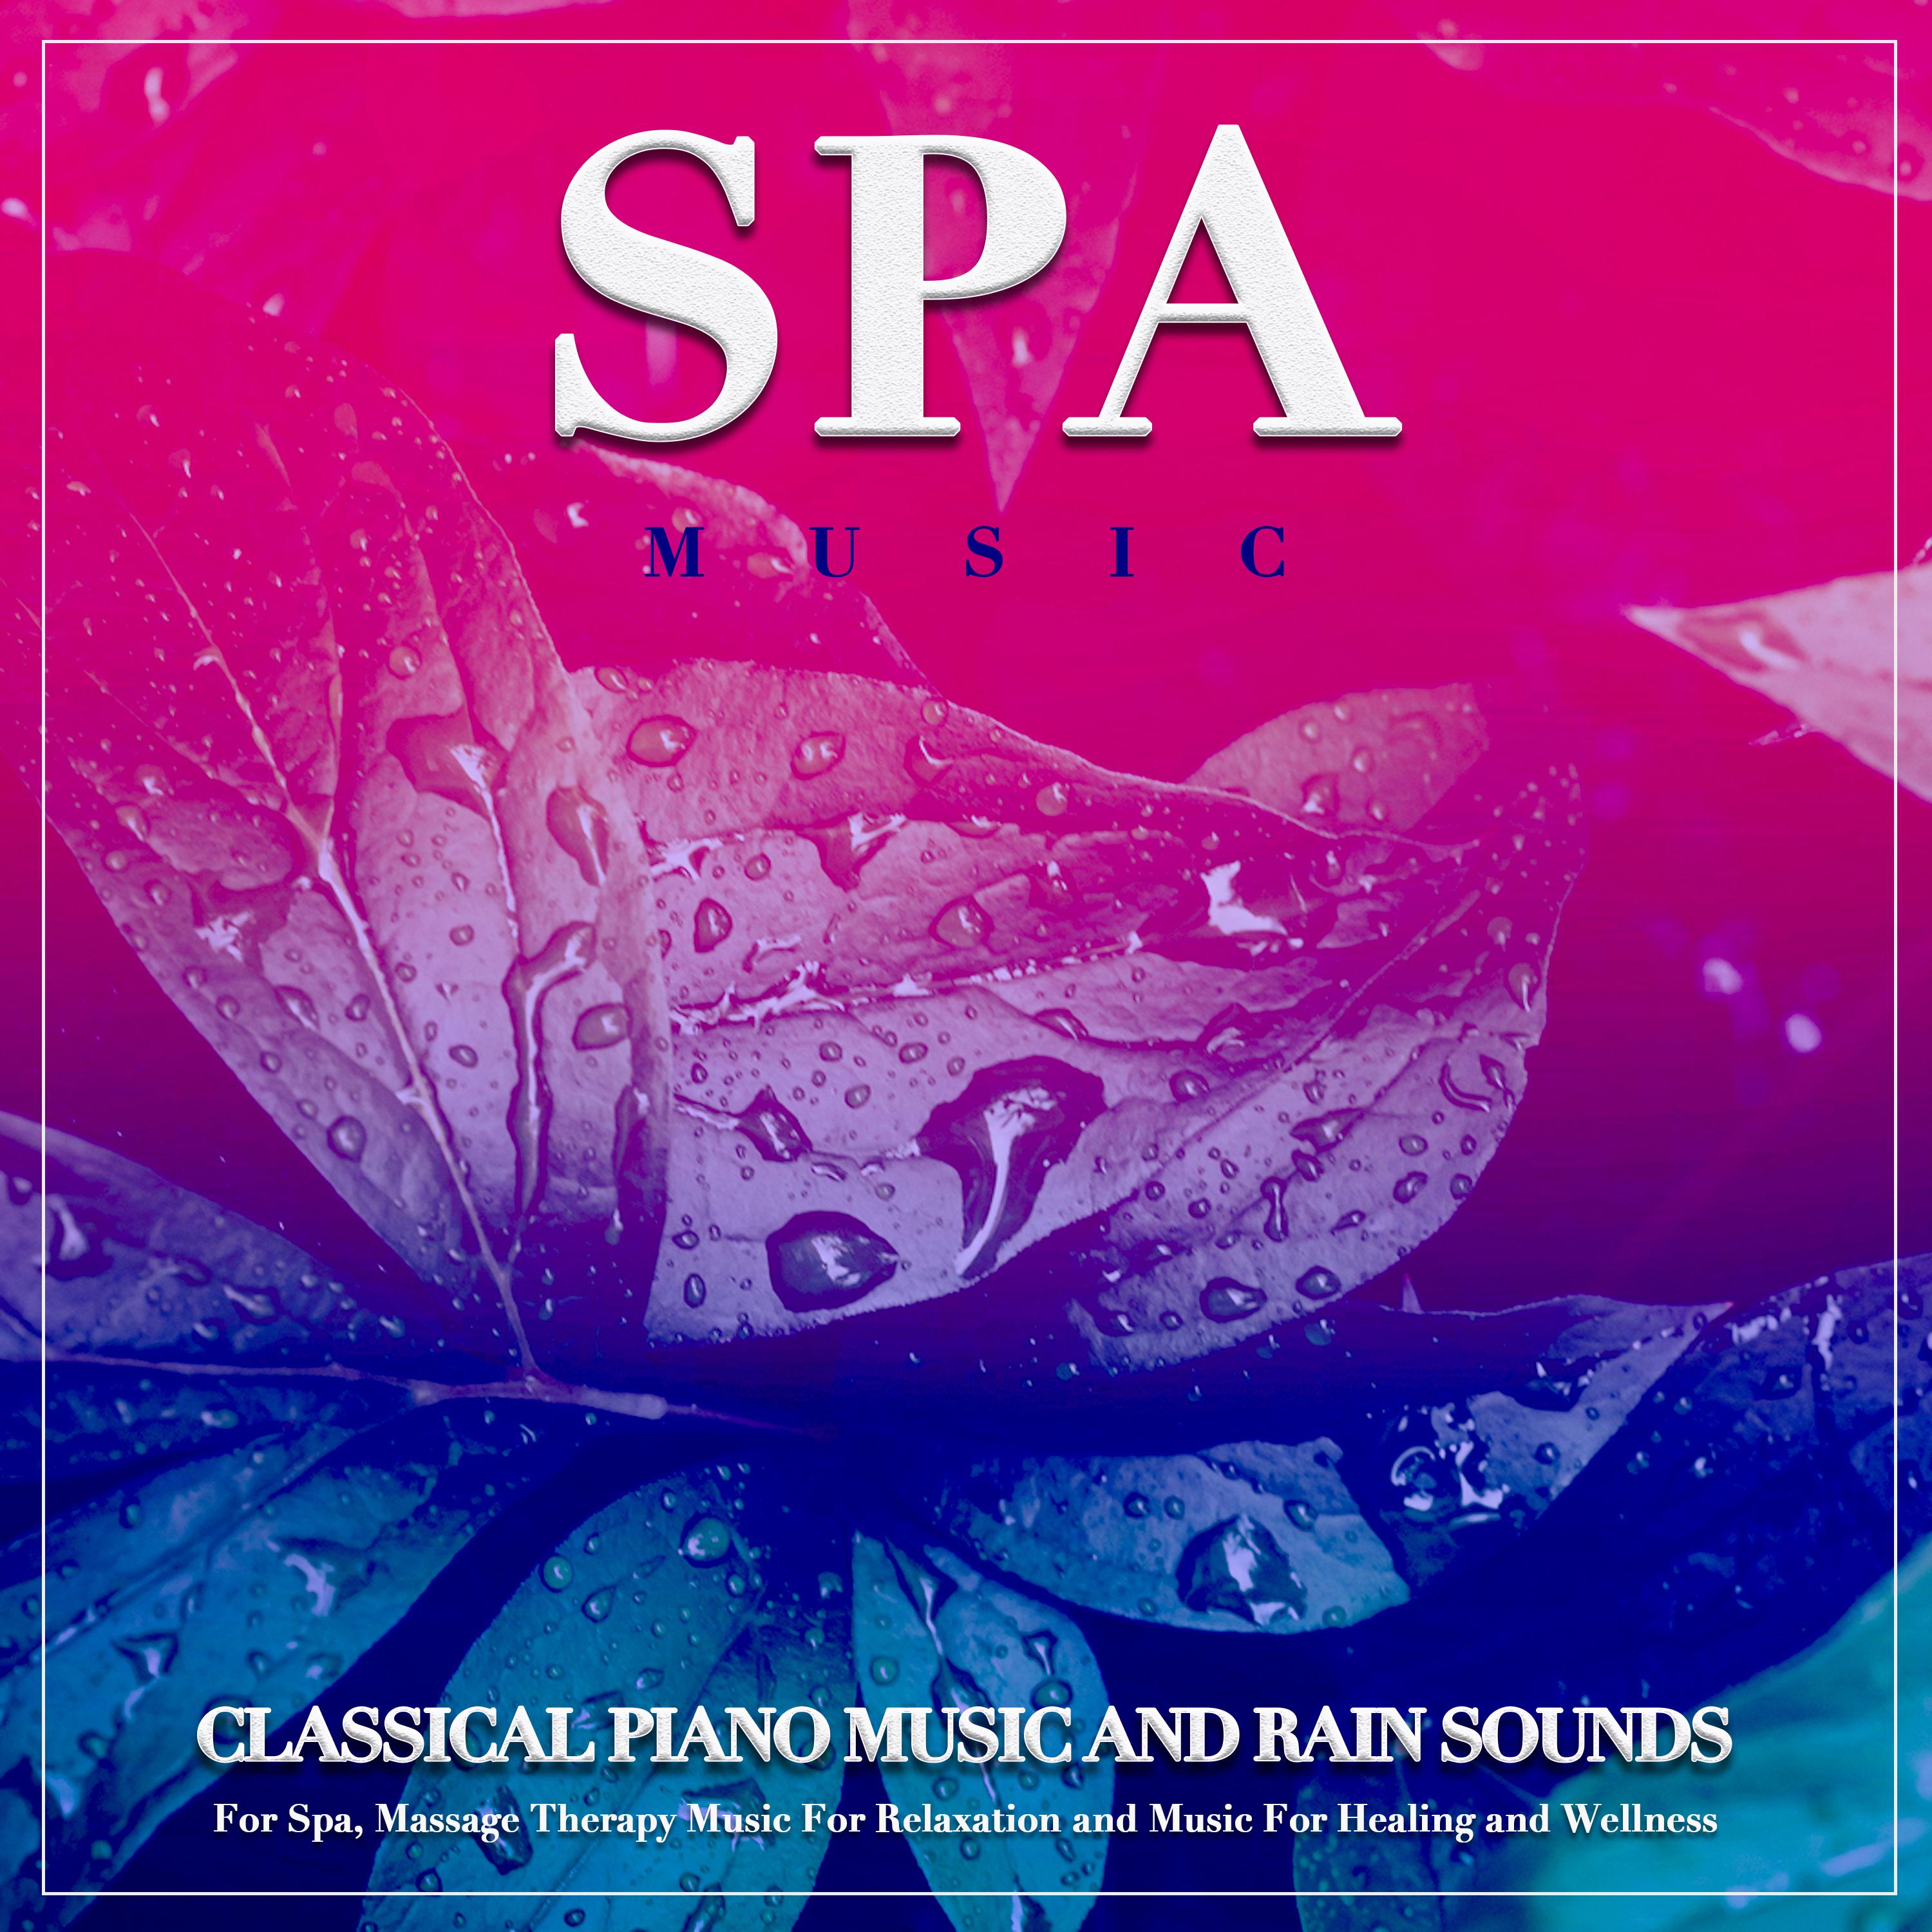 Rhapsody In Blue - Gershwin - Classical Piano and Rain Sounds - Spa Music